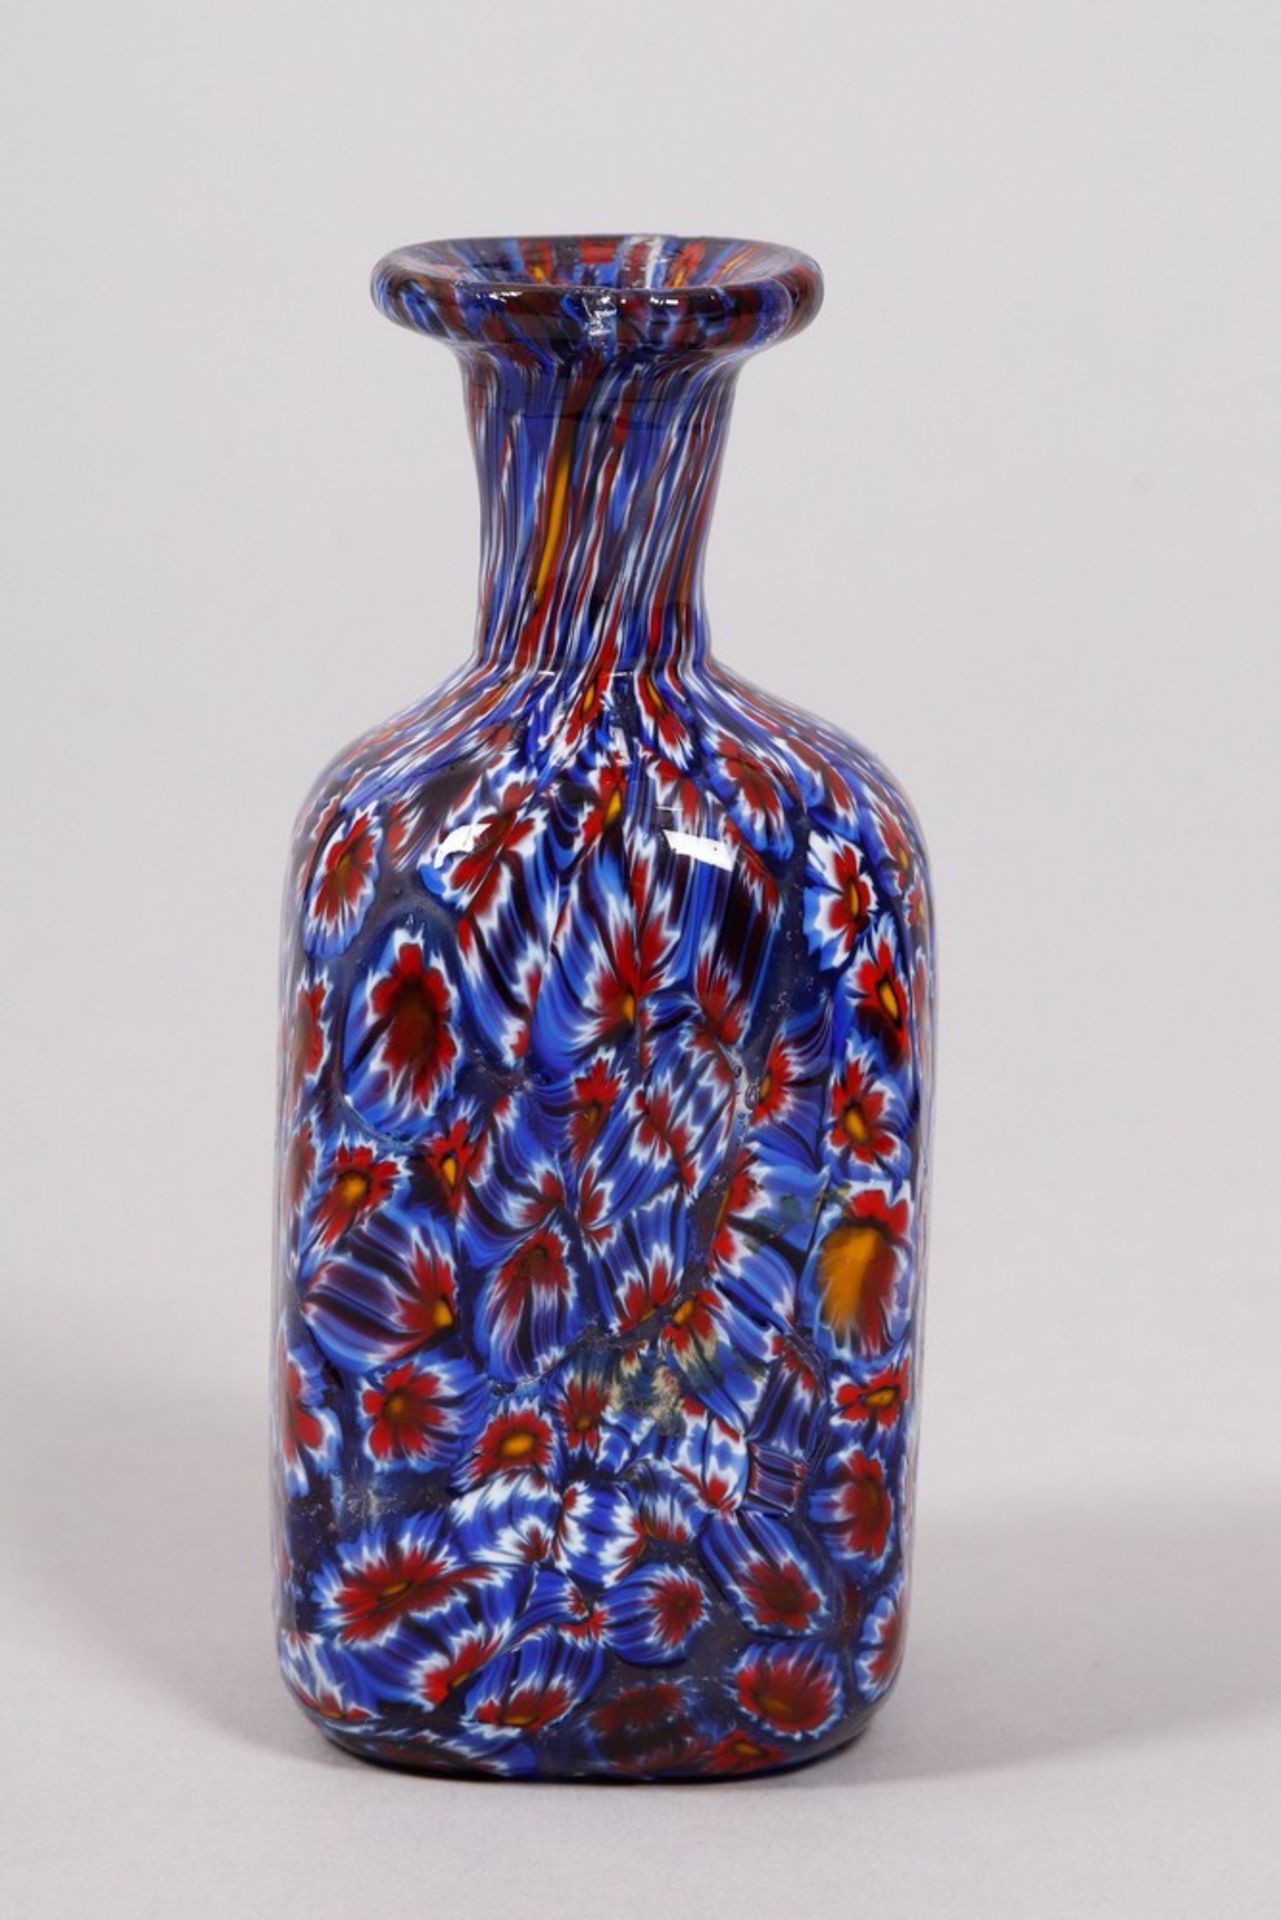 Small bottle vase, probably Vetreria Campanella, Murano, Italy, mid-20th C. - Image 2 of 4